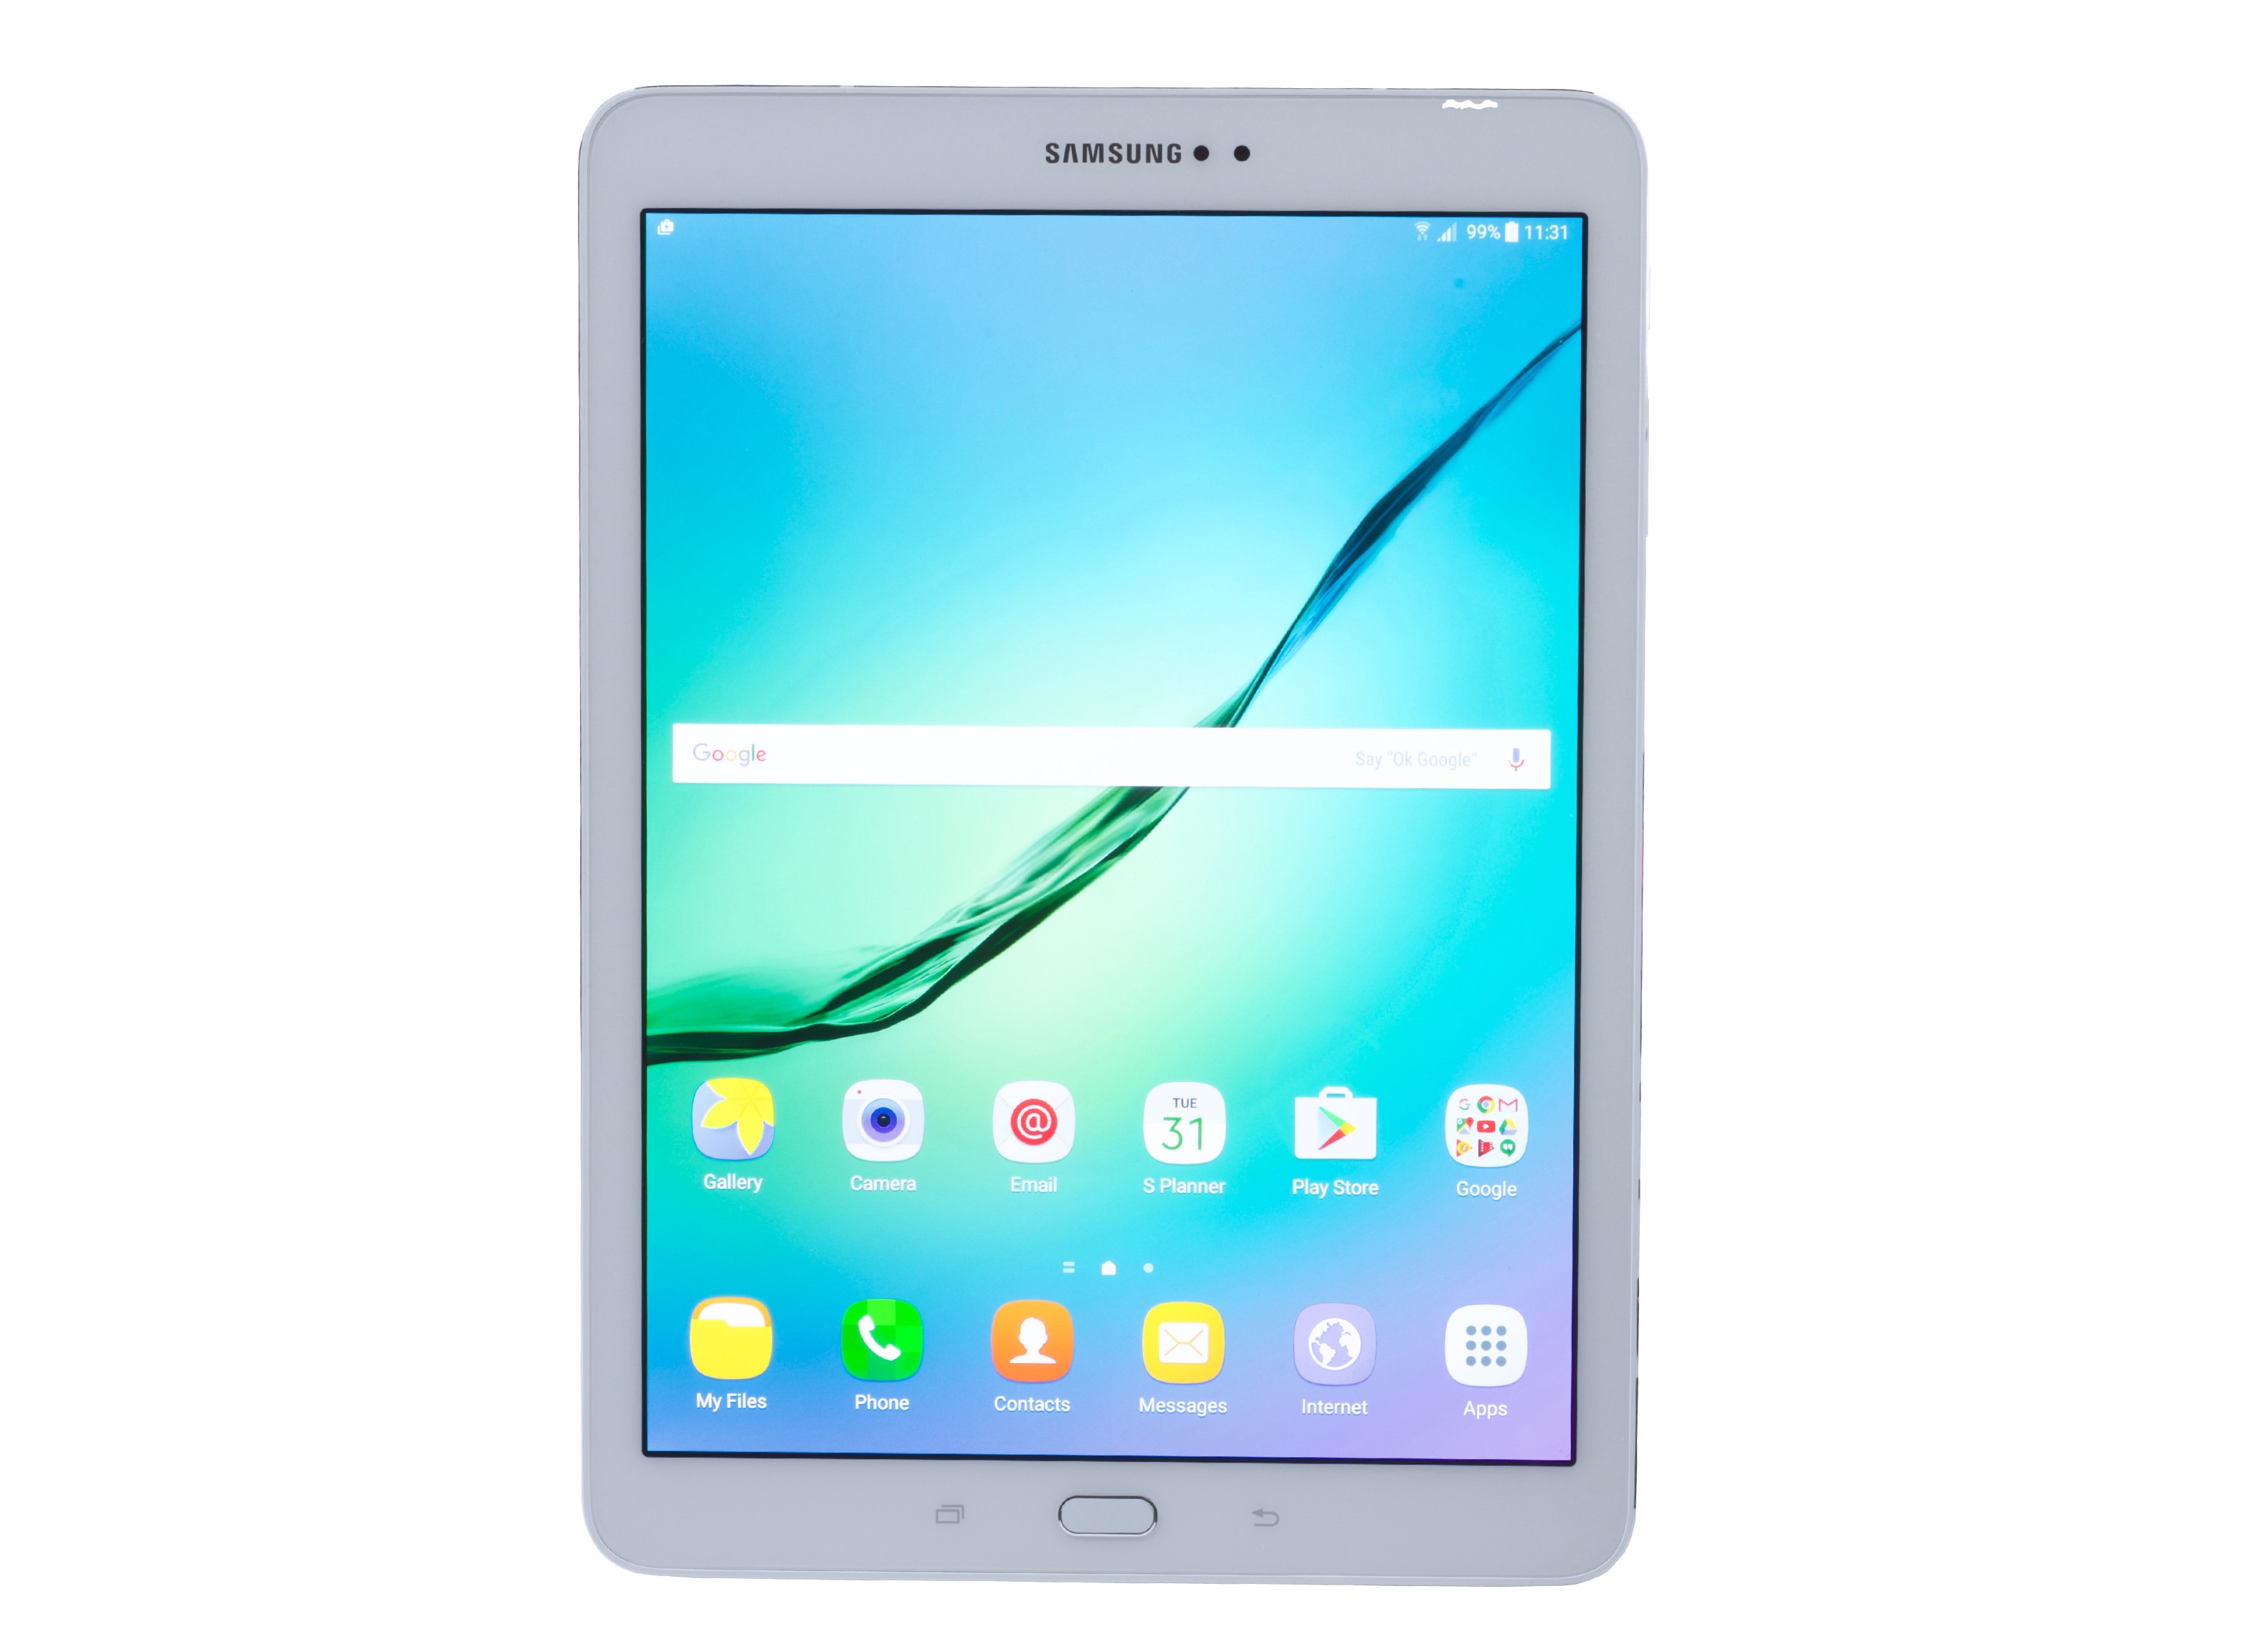 Amerika şaşırmıştım Sabah egzersizleri  Samsung Galaxy Tab S2 VE 9.7 (SM-T813) (32GB) Tablet - Consumer Reports